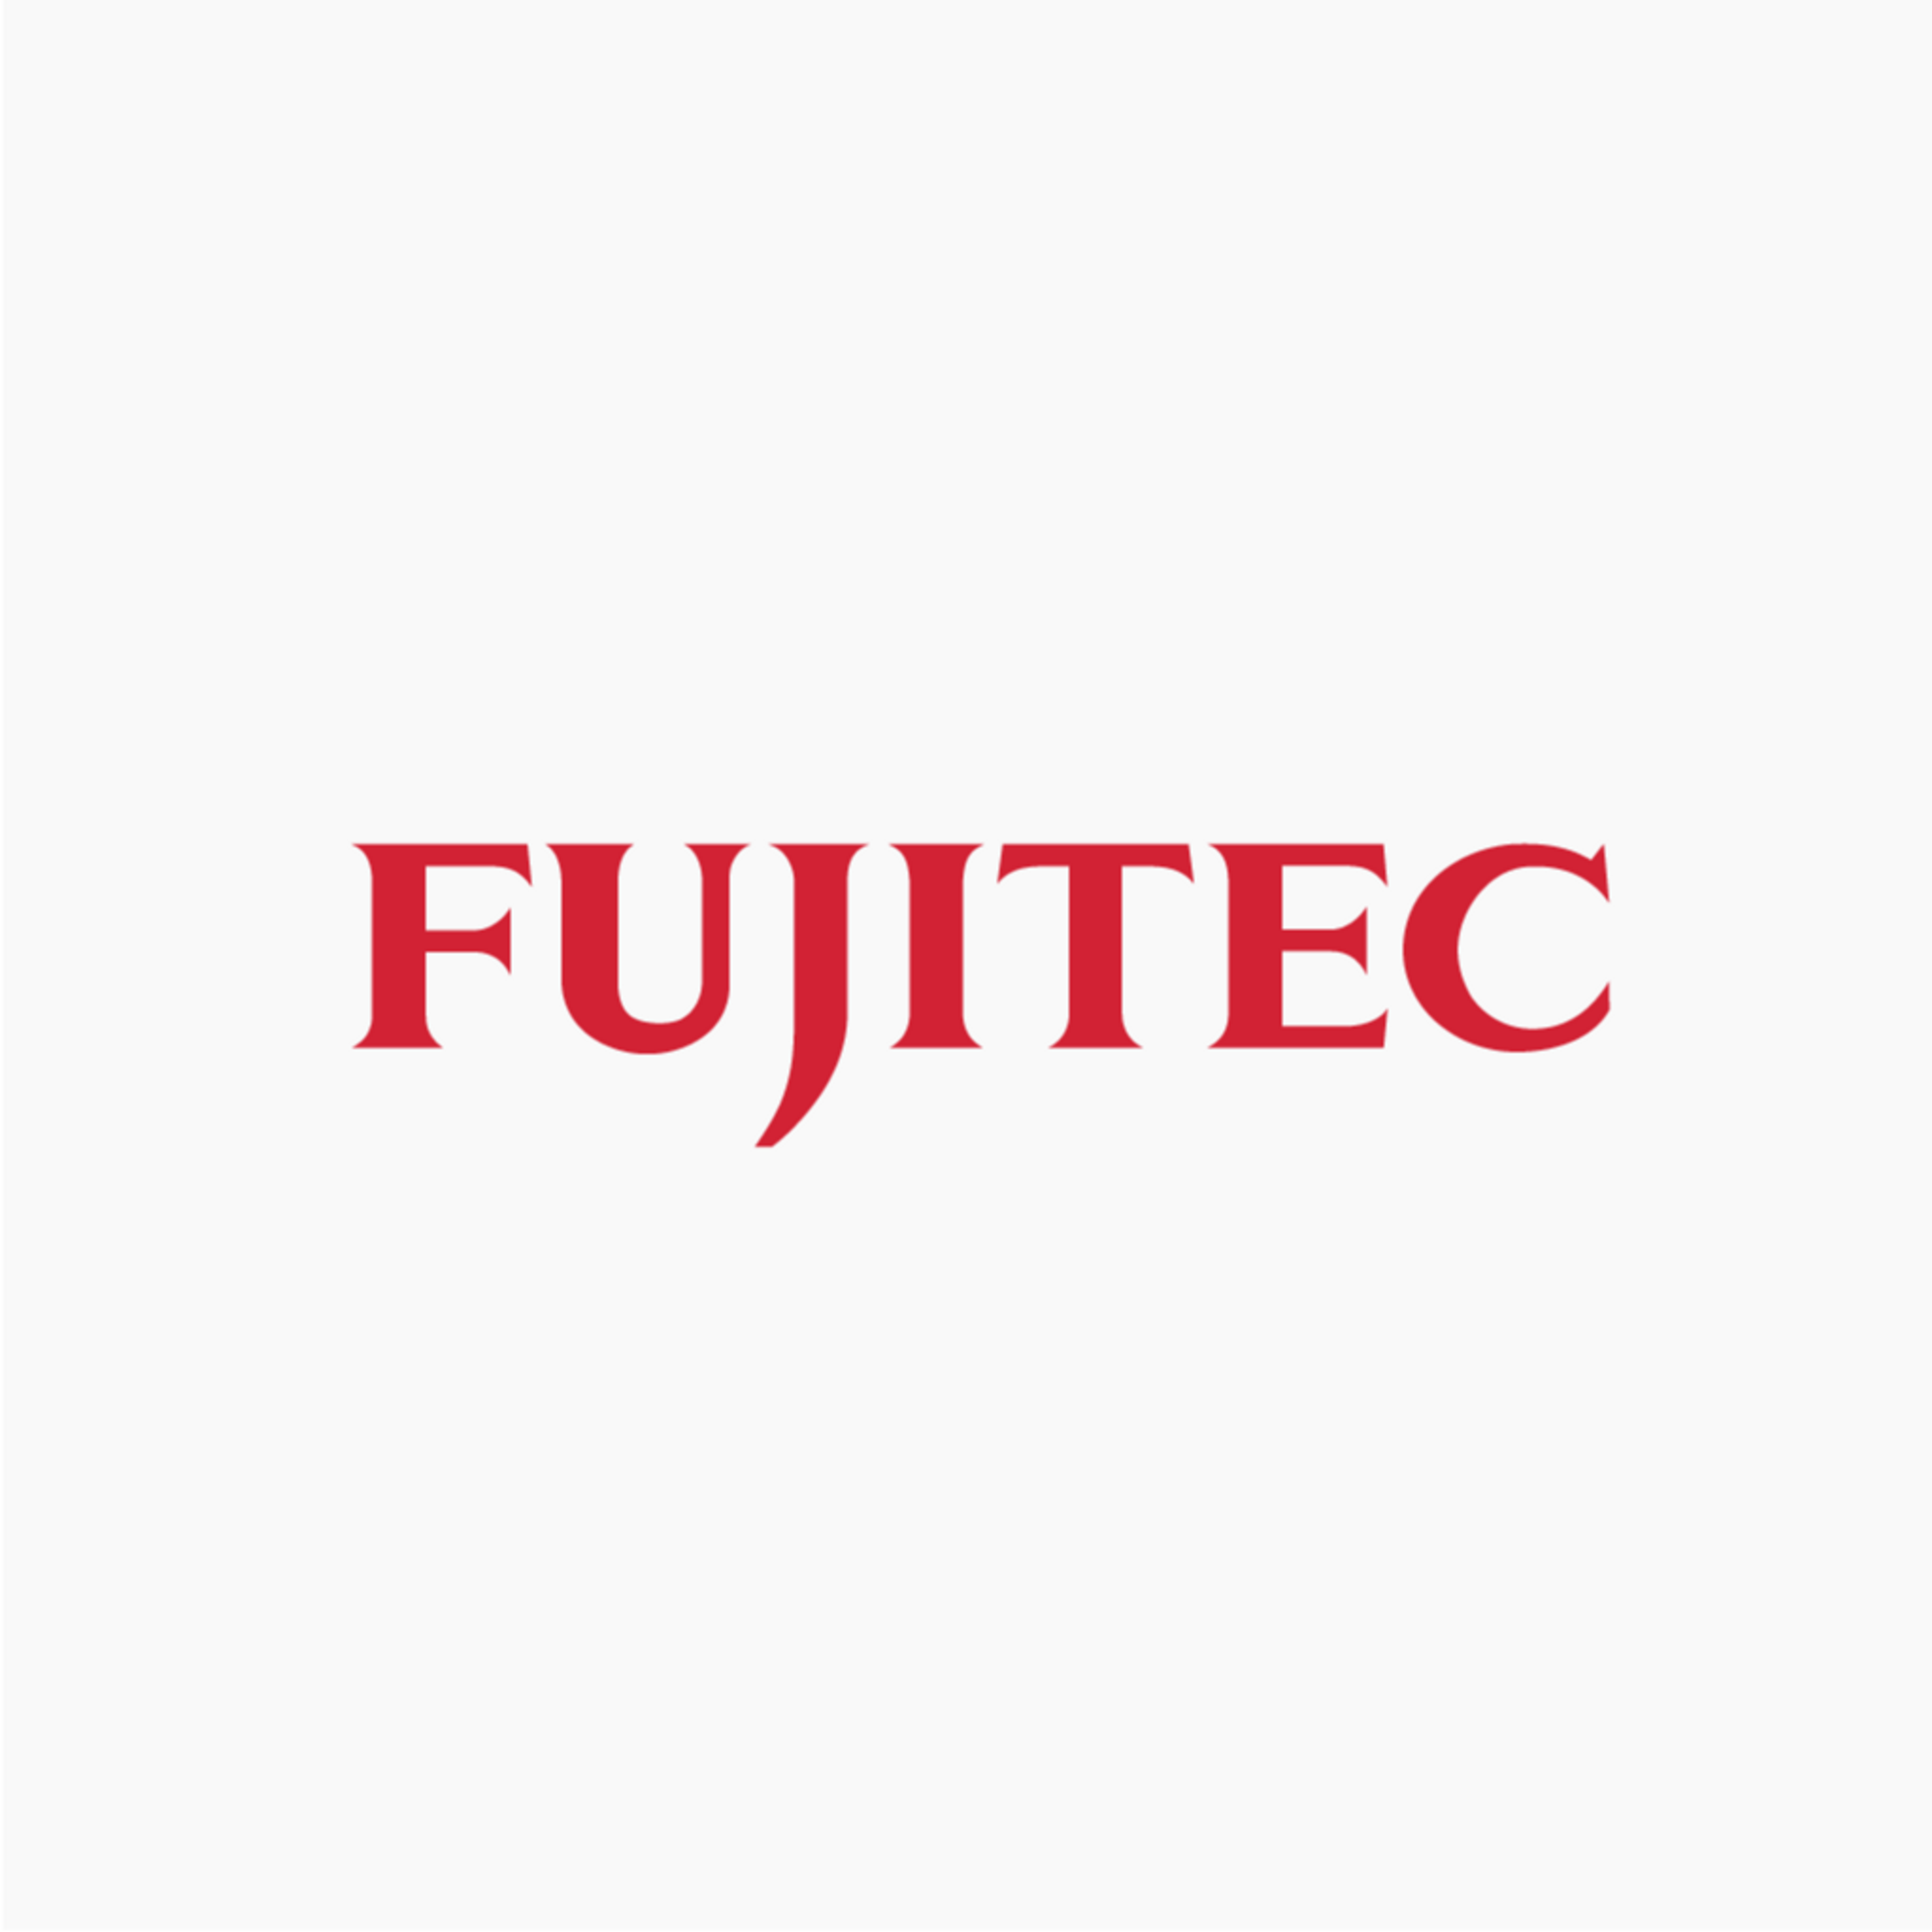 Fujitech Singapore